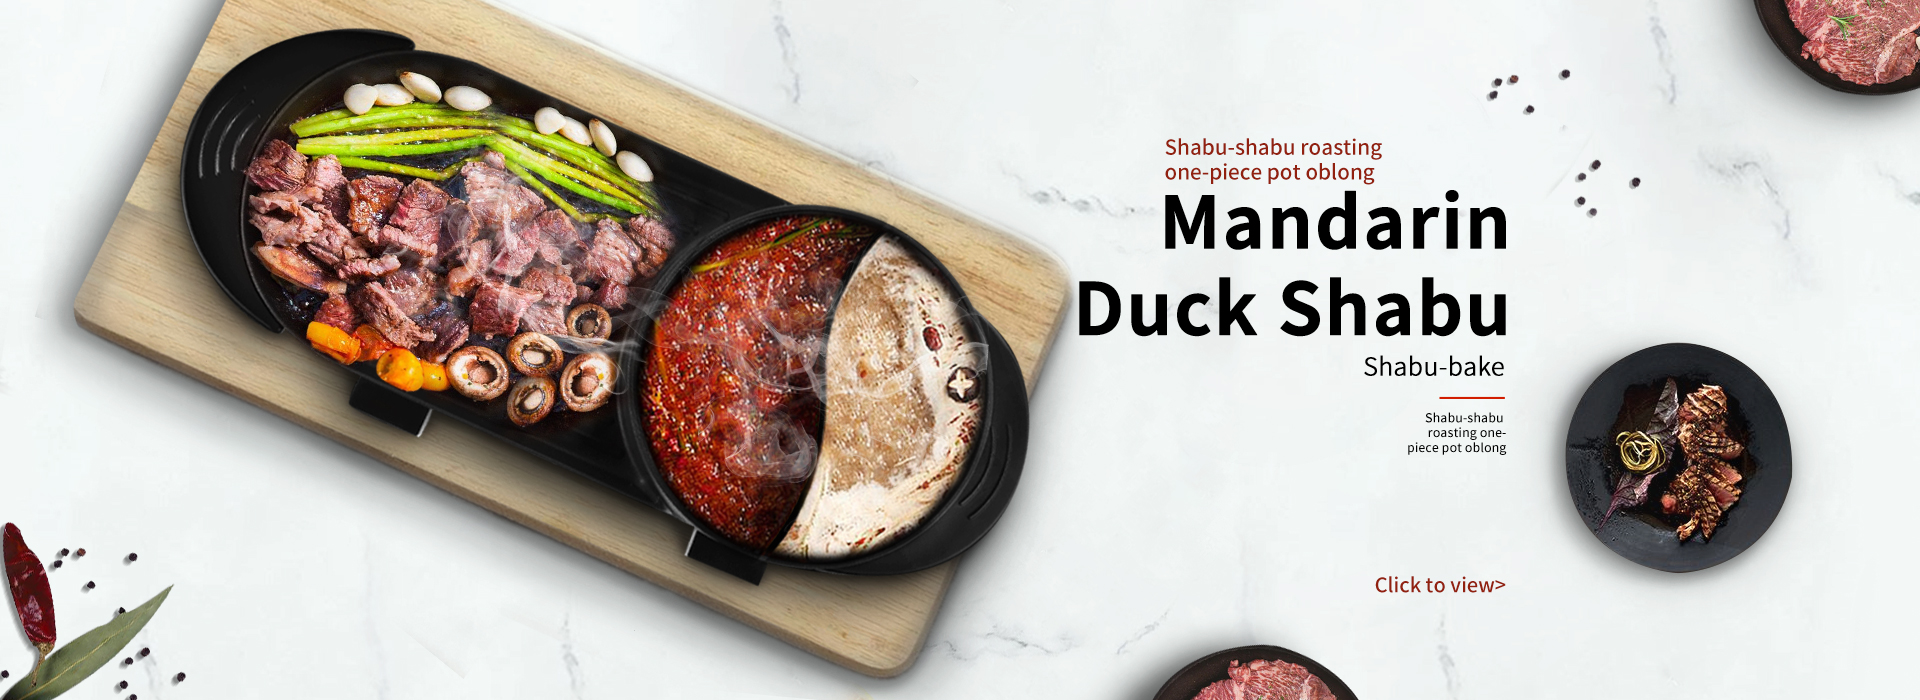 Mandarin duck shabu